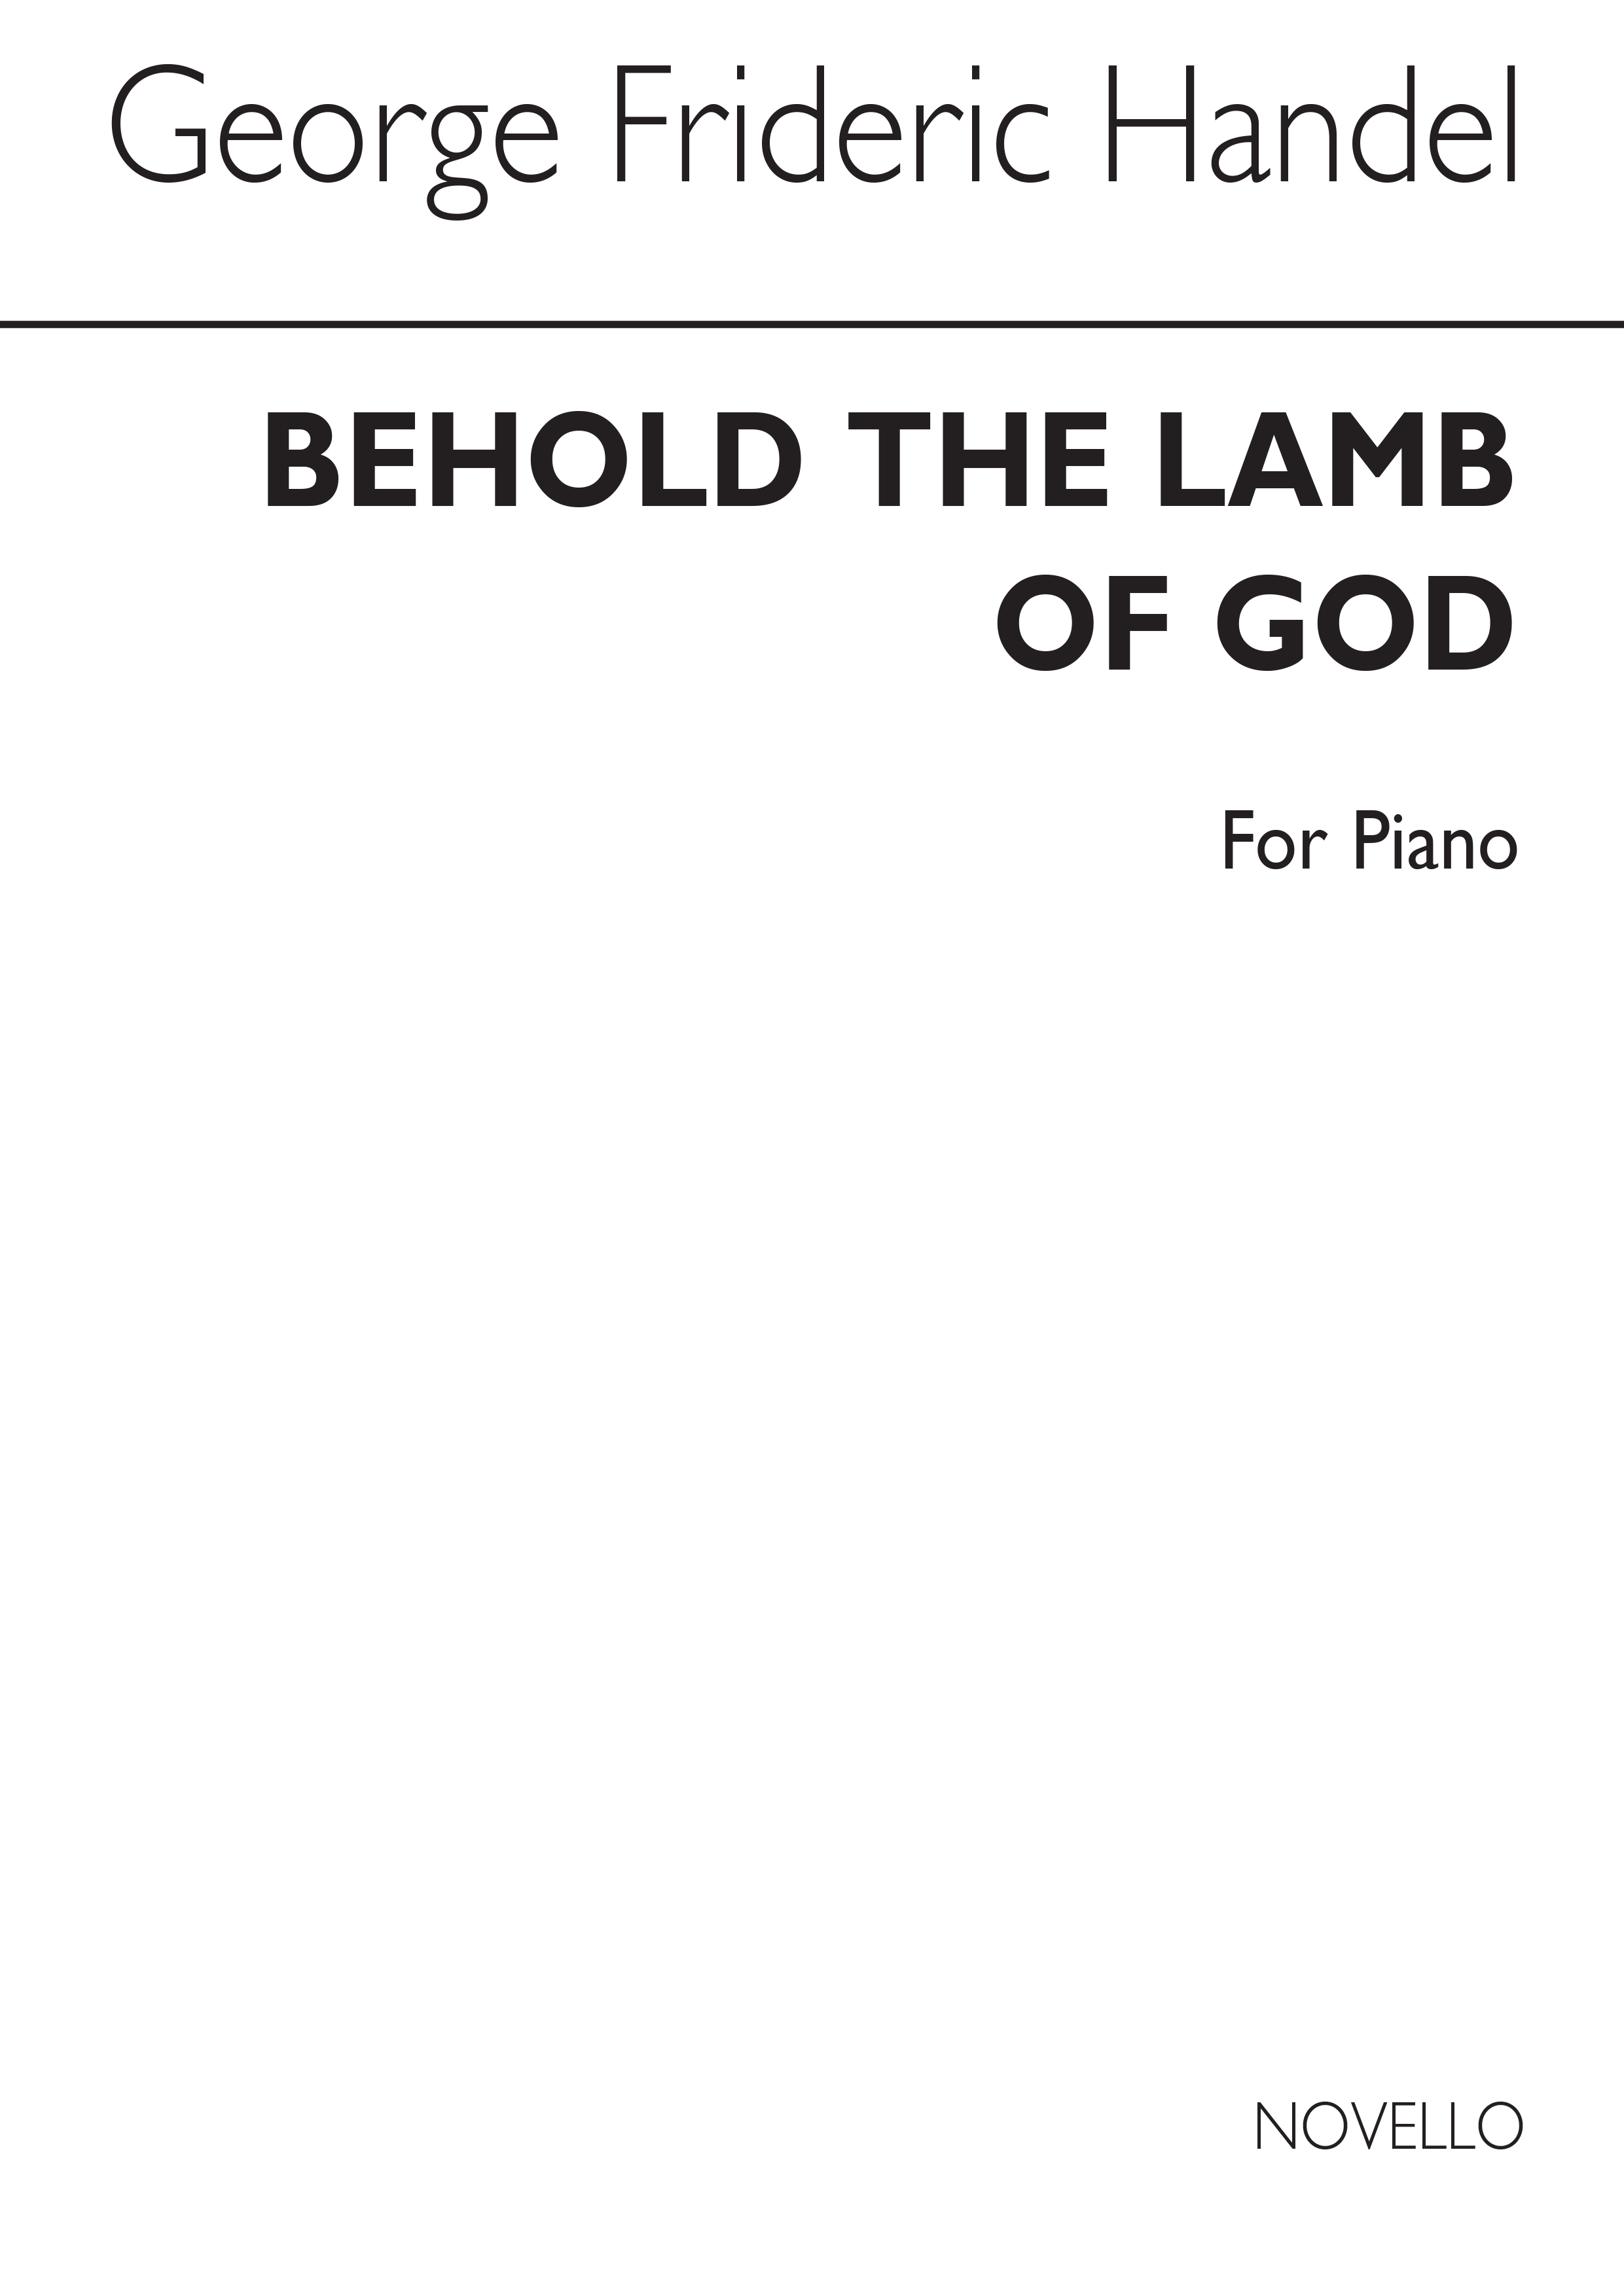 Georg Friedrich Hndel: Gf Behold The Lamb Of God (Messiah) Organ: Organ: